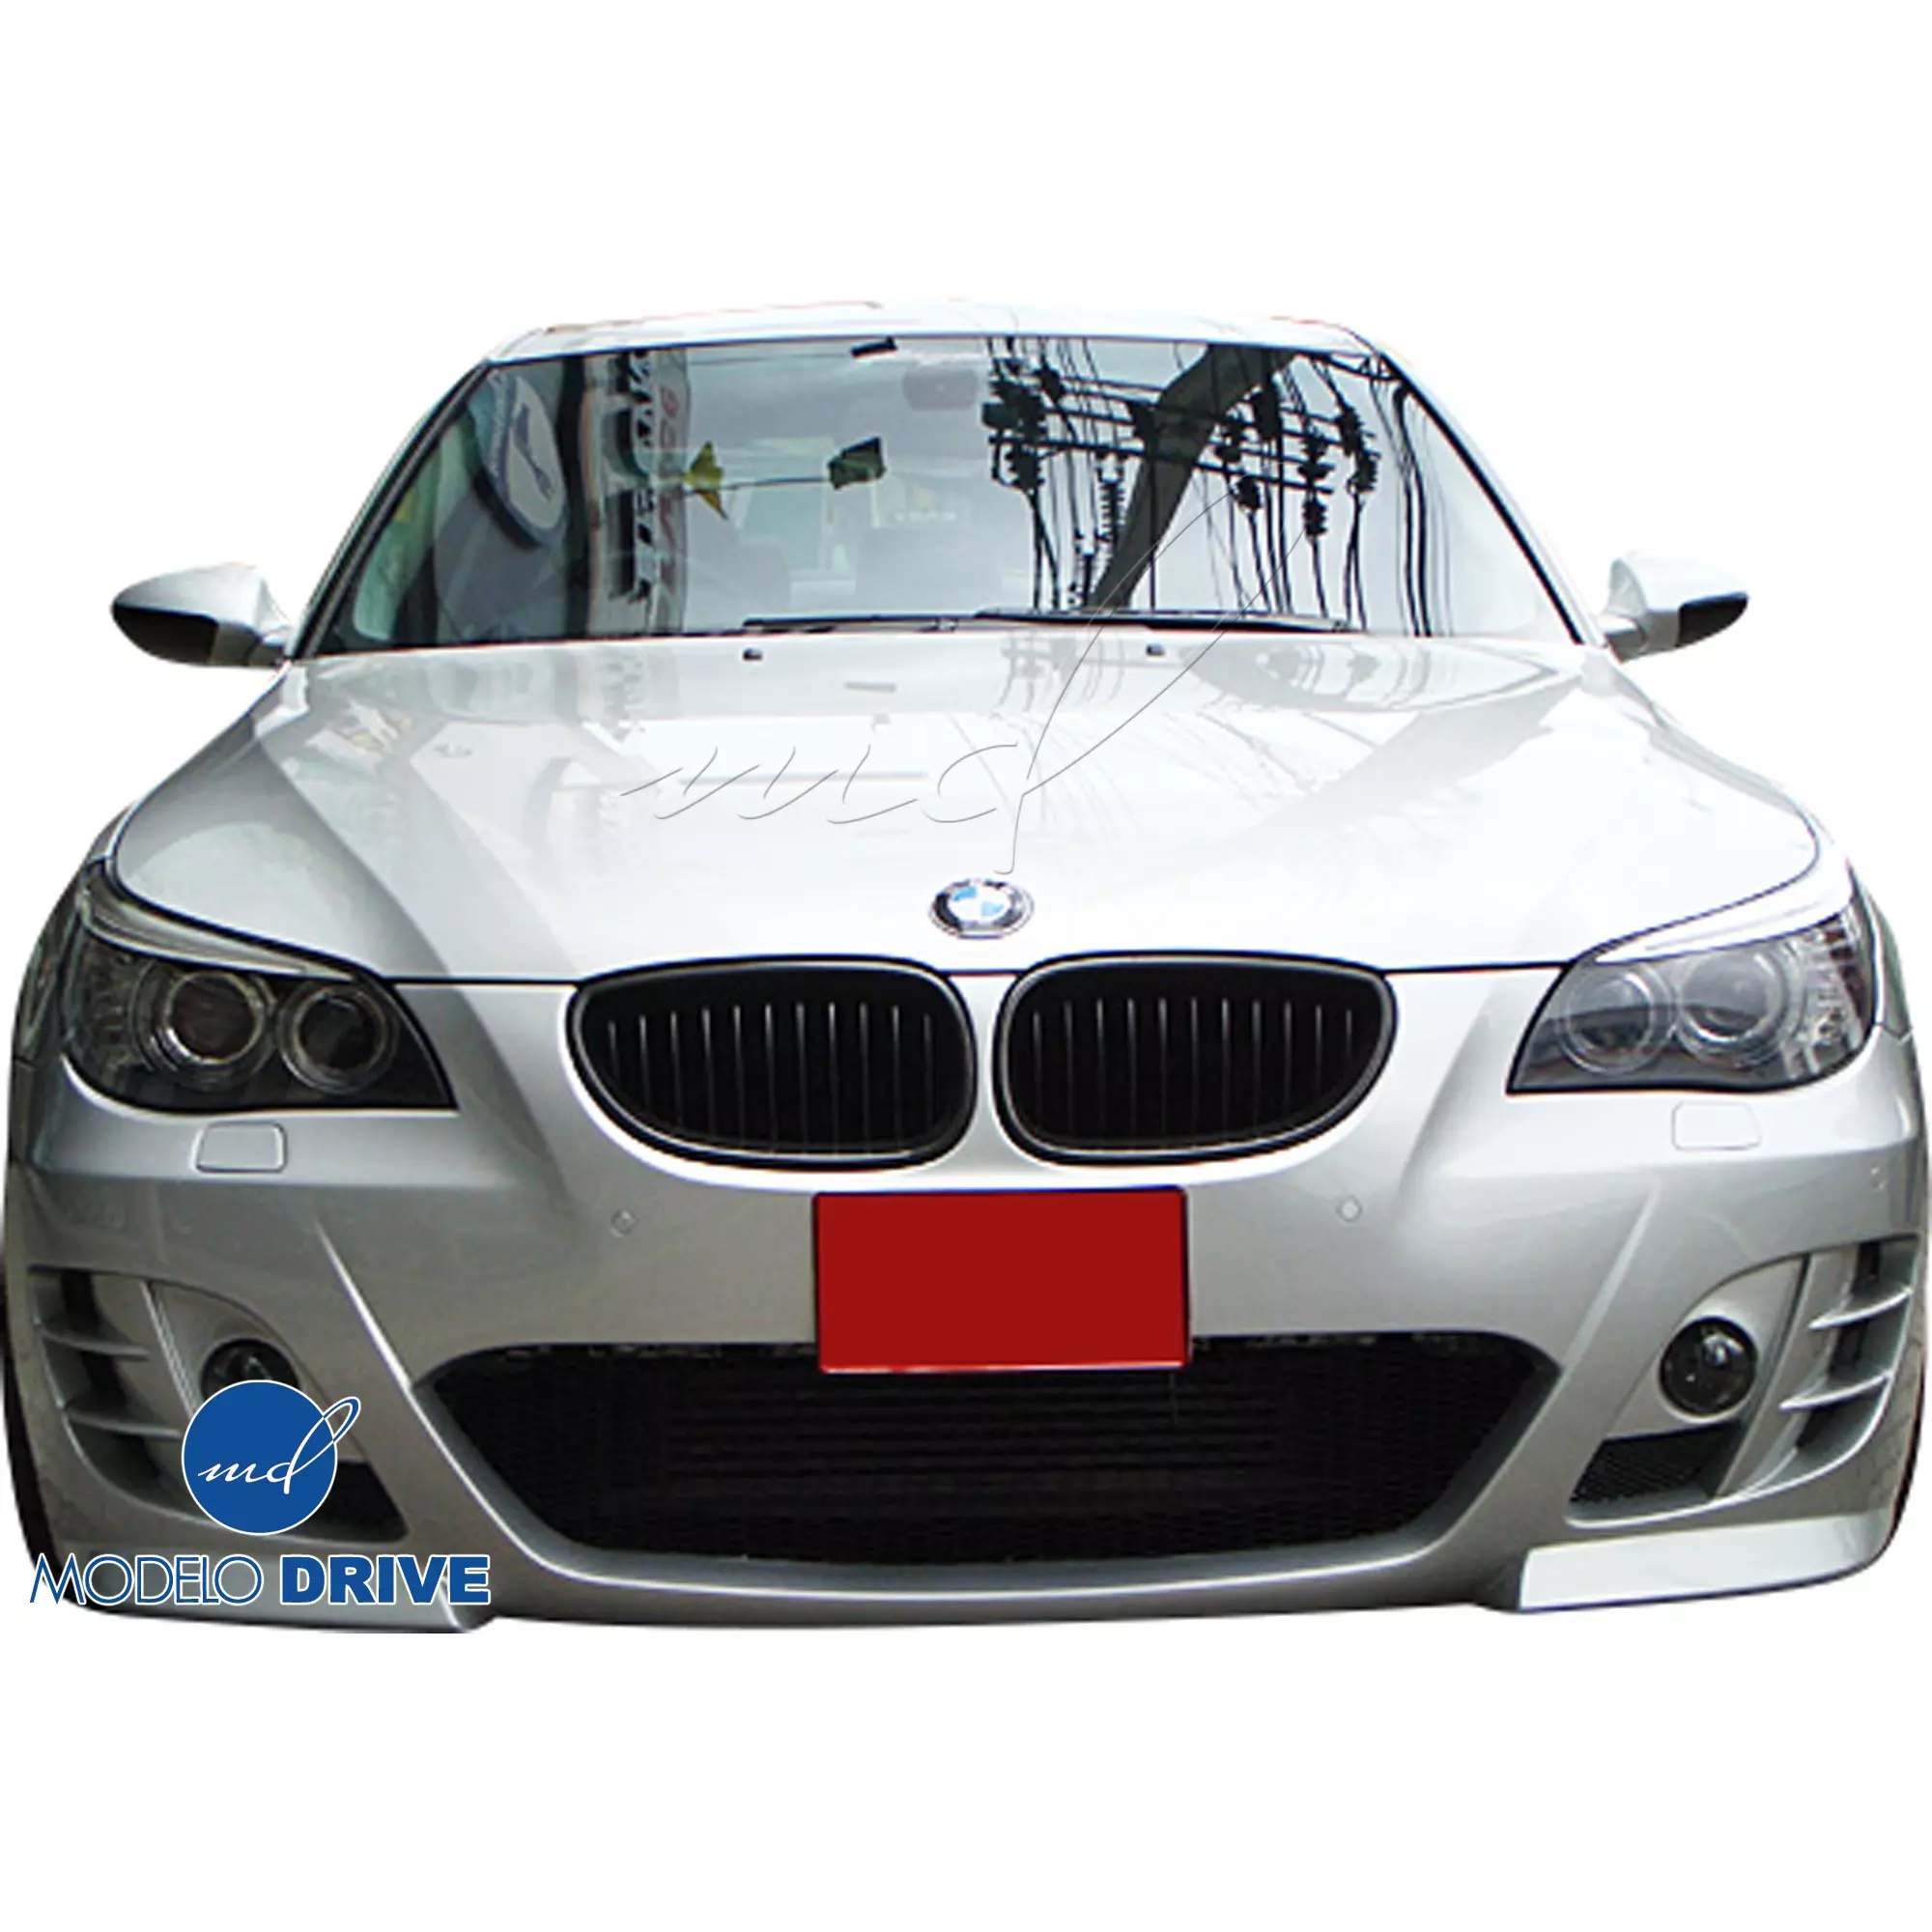 ModeloDrive FRP KERS Front Bumper > BMW 5-Series E60 2004-2010 > 4dr - Image 3